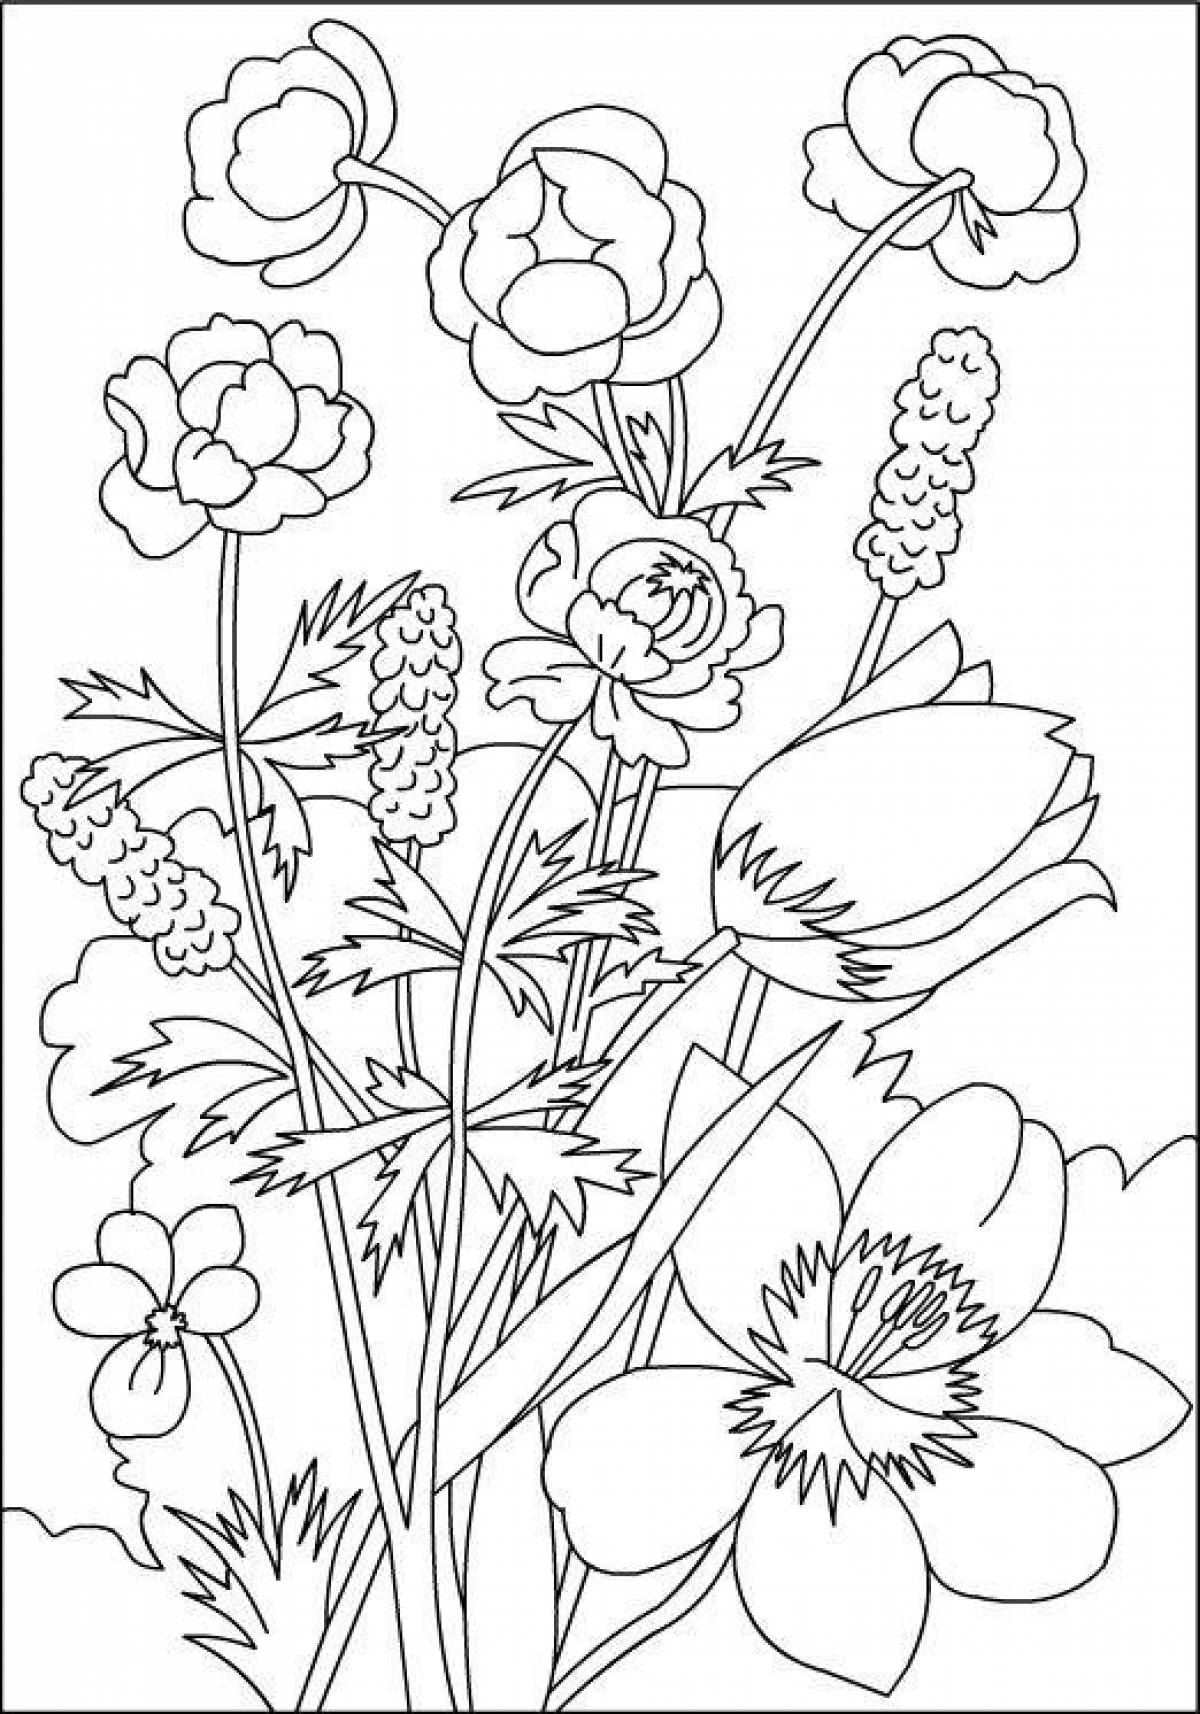 Безмятежная раскраска цветы для детей 6-7 лет